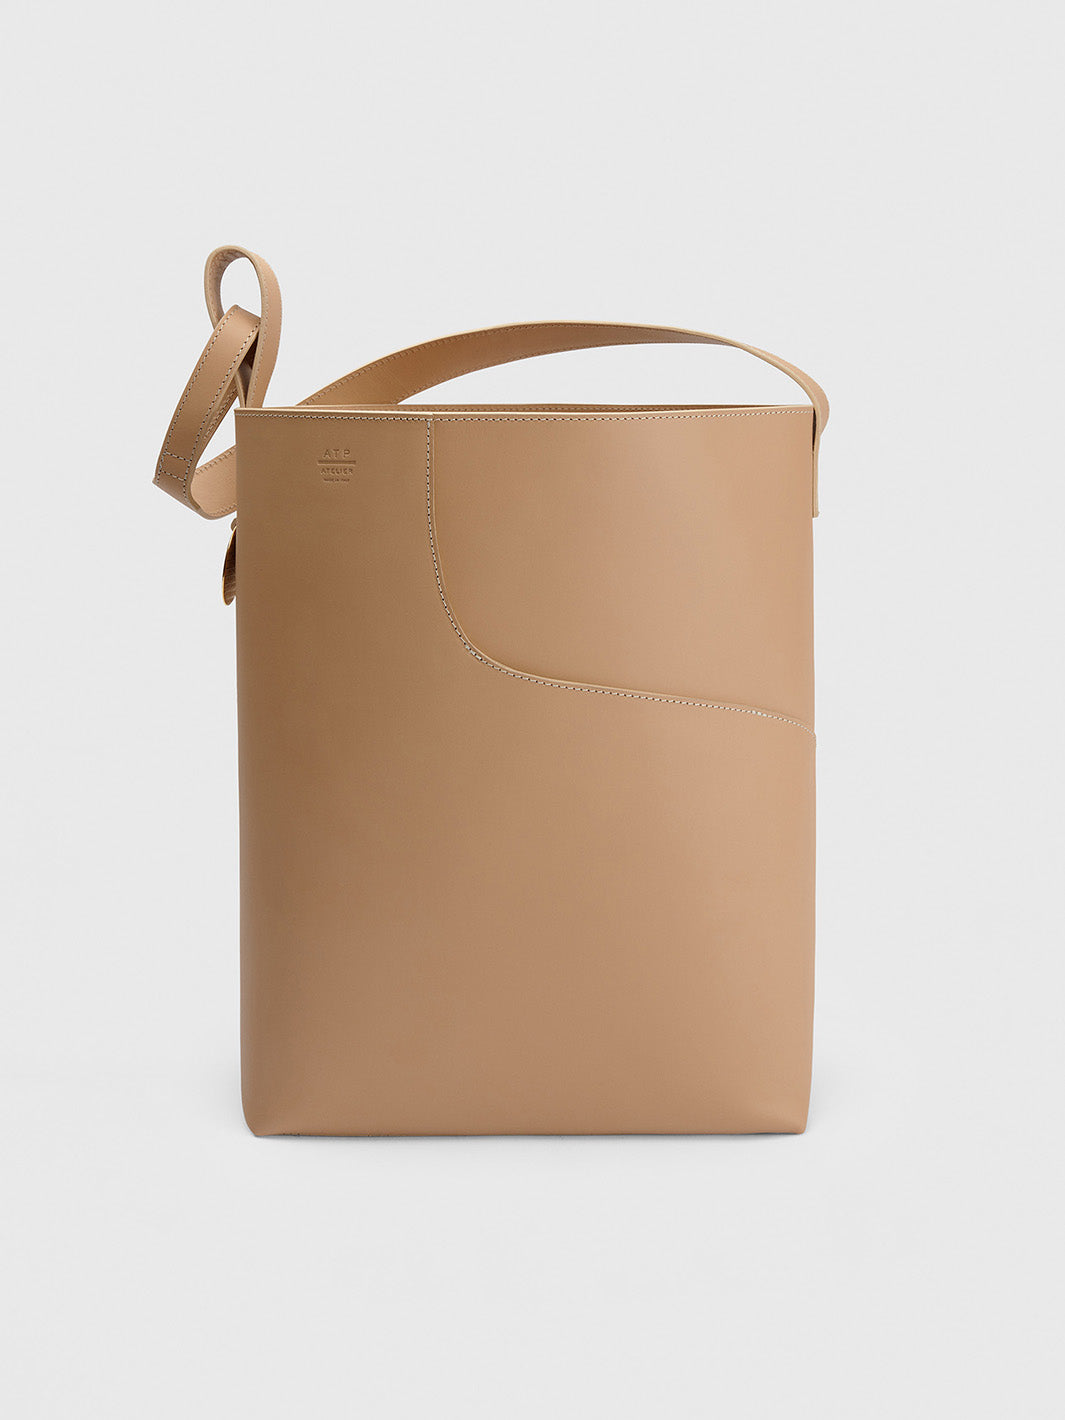 Pienza Nocciola/Linen Leather Large tote Bag